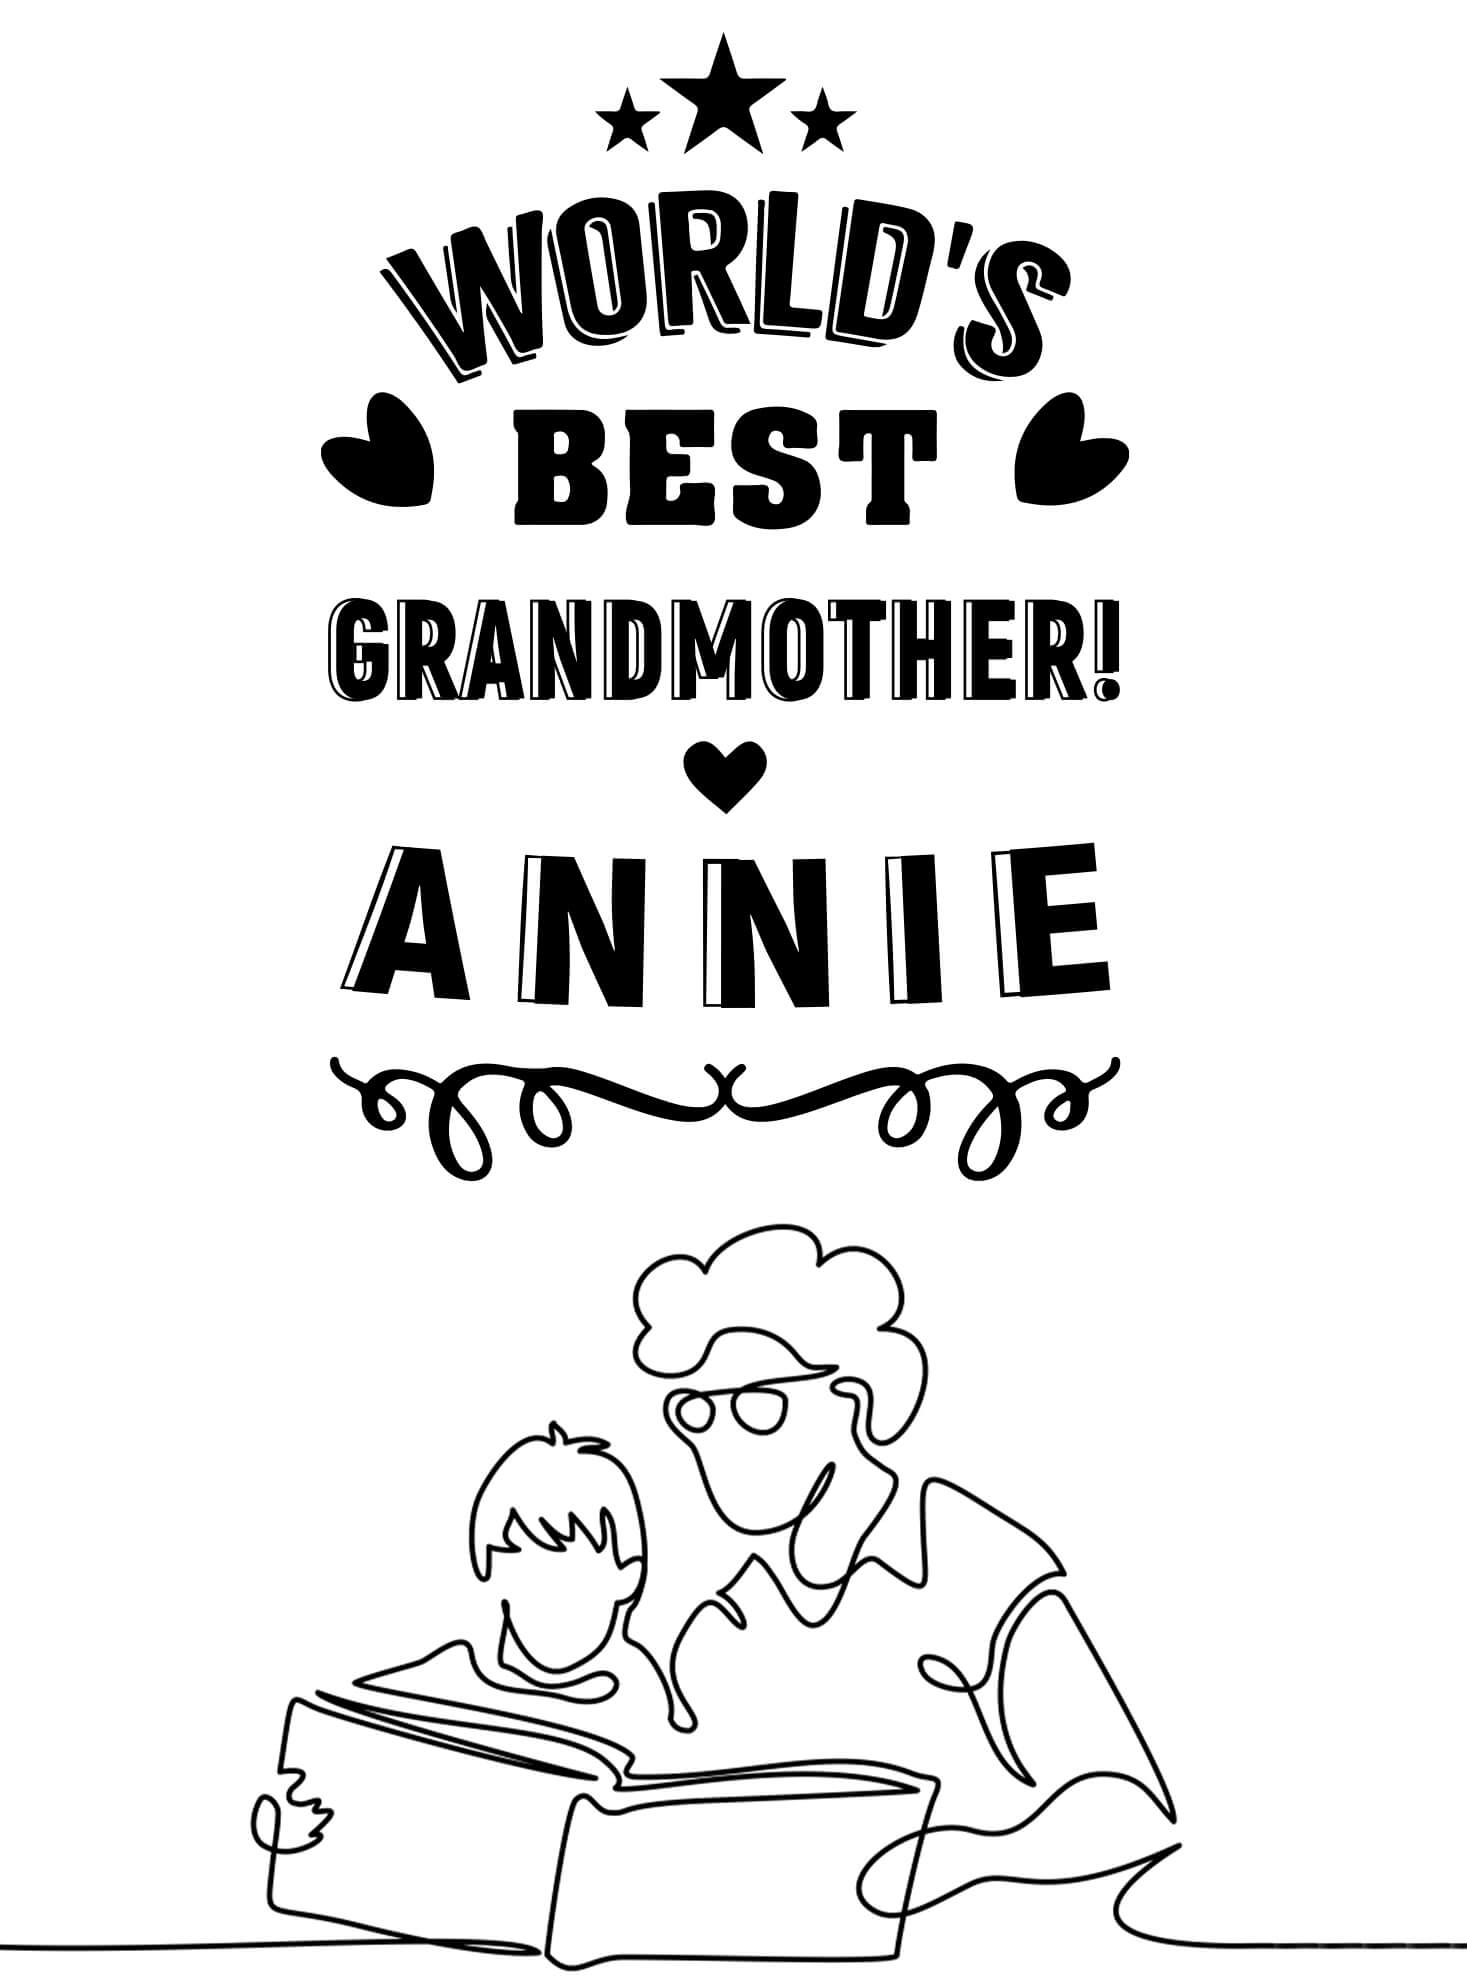 World‚Äö's Best Grandmother!